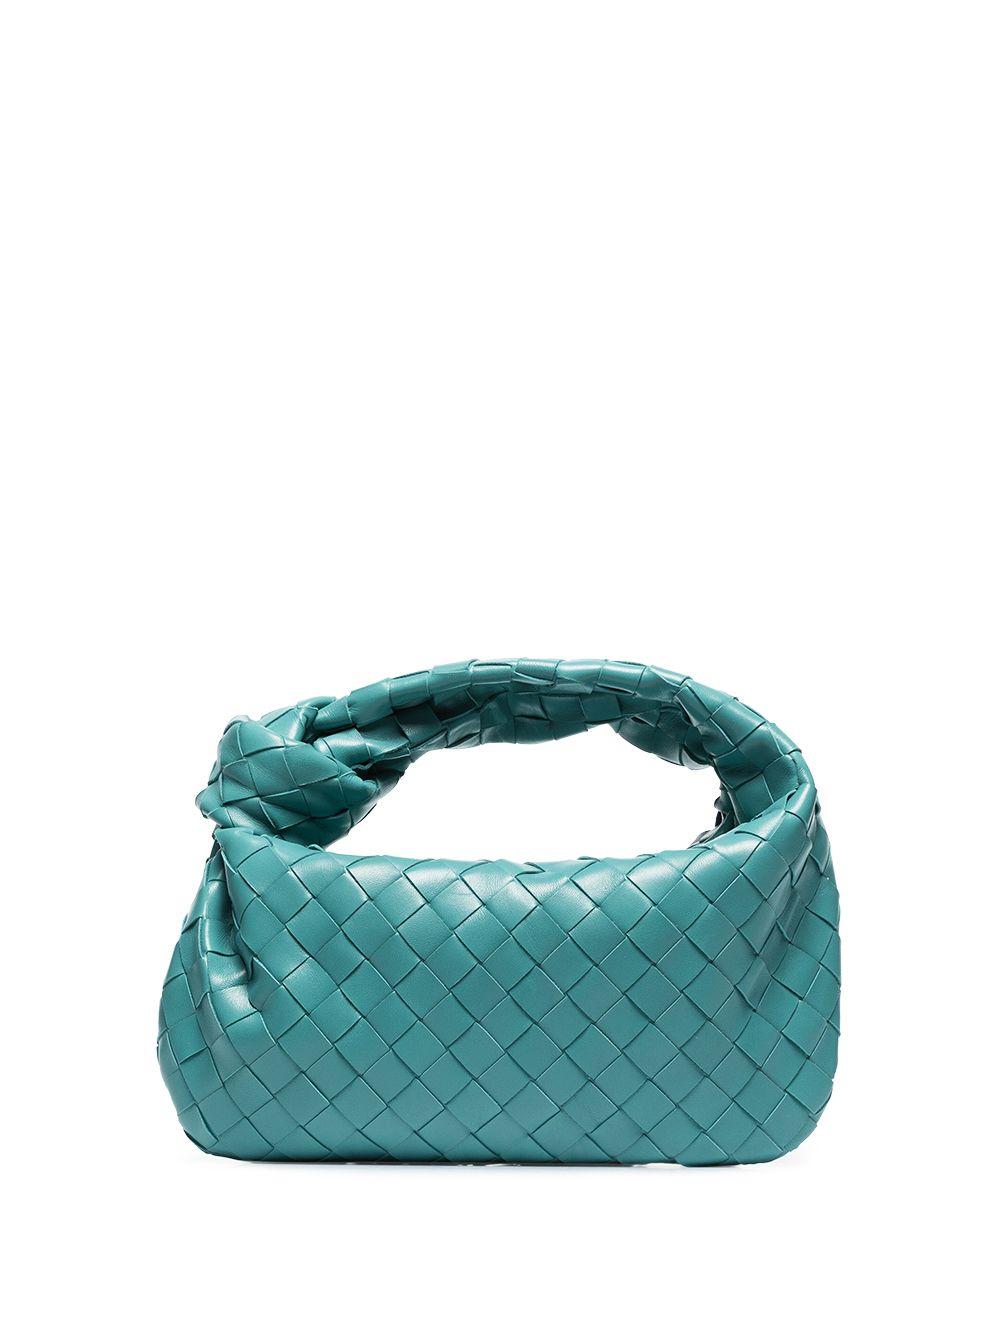 Bottega Veneta Bv Jodie Leather Mini Bag in Blue - Lyst